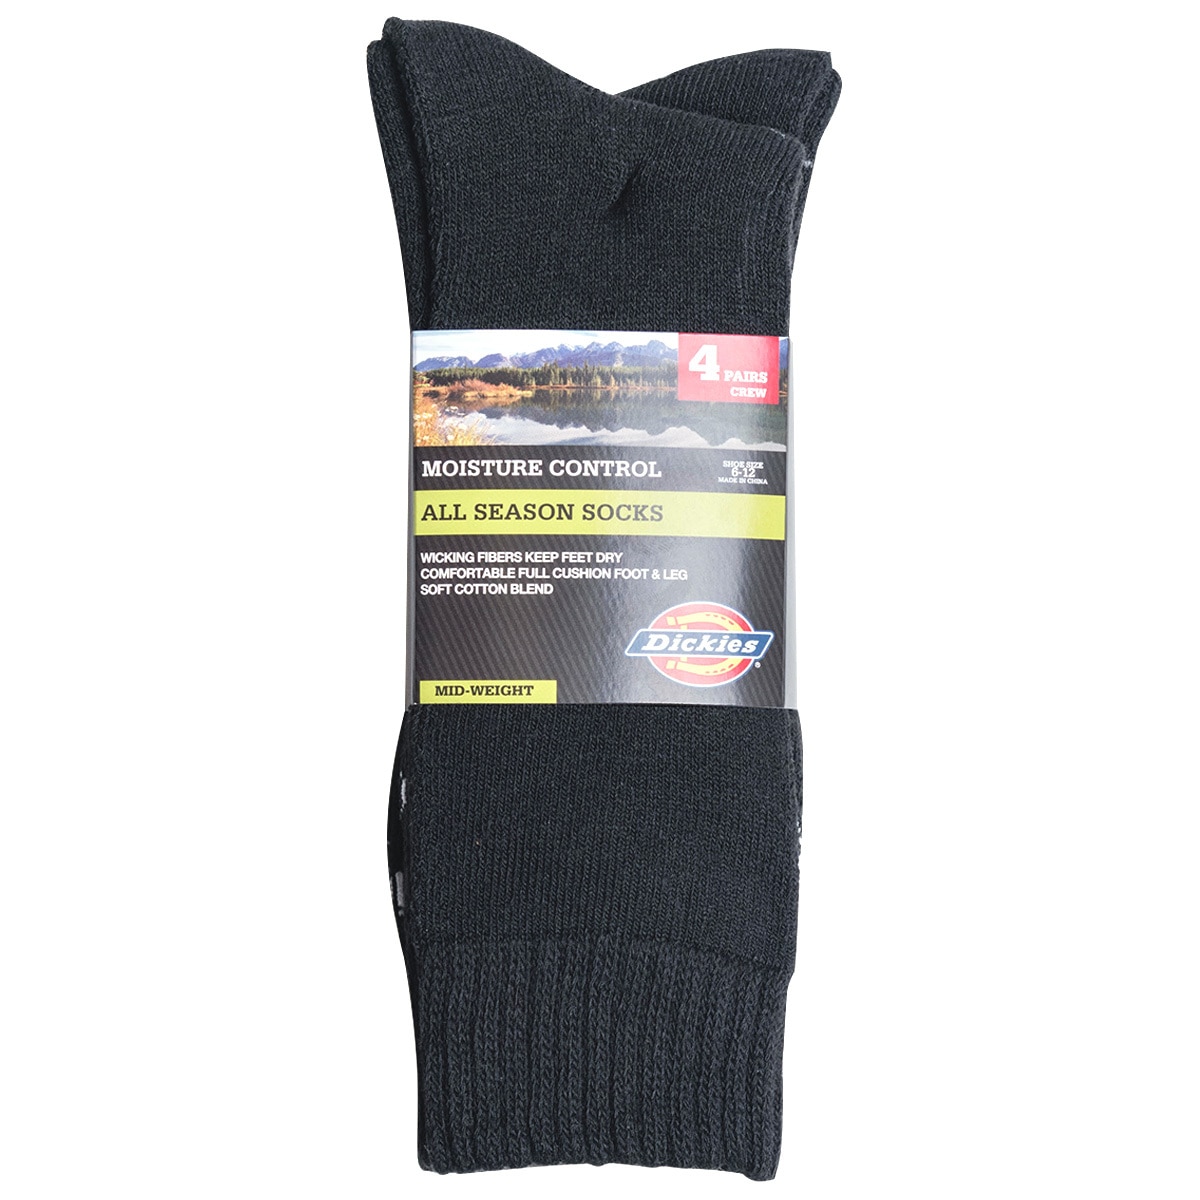 6-11 UK Shoe Dickies Mens Industrial Extra Support Work Boot Socks Black Pack Of 2 